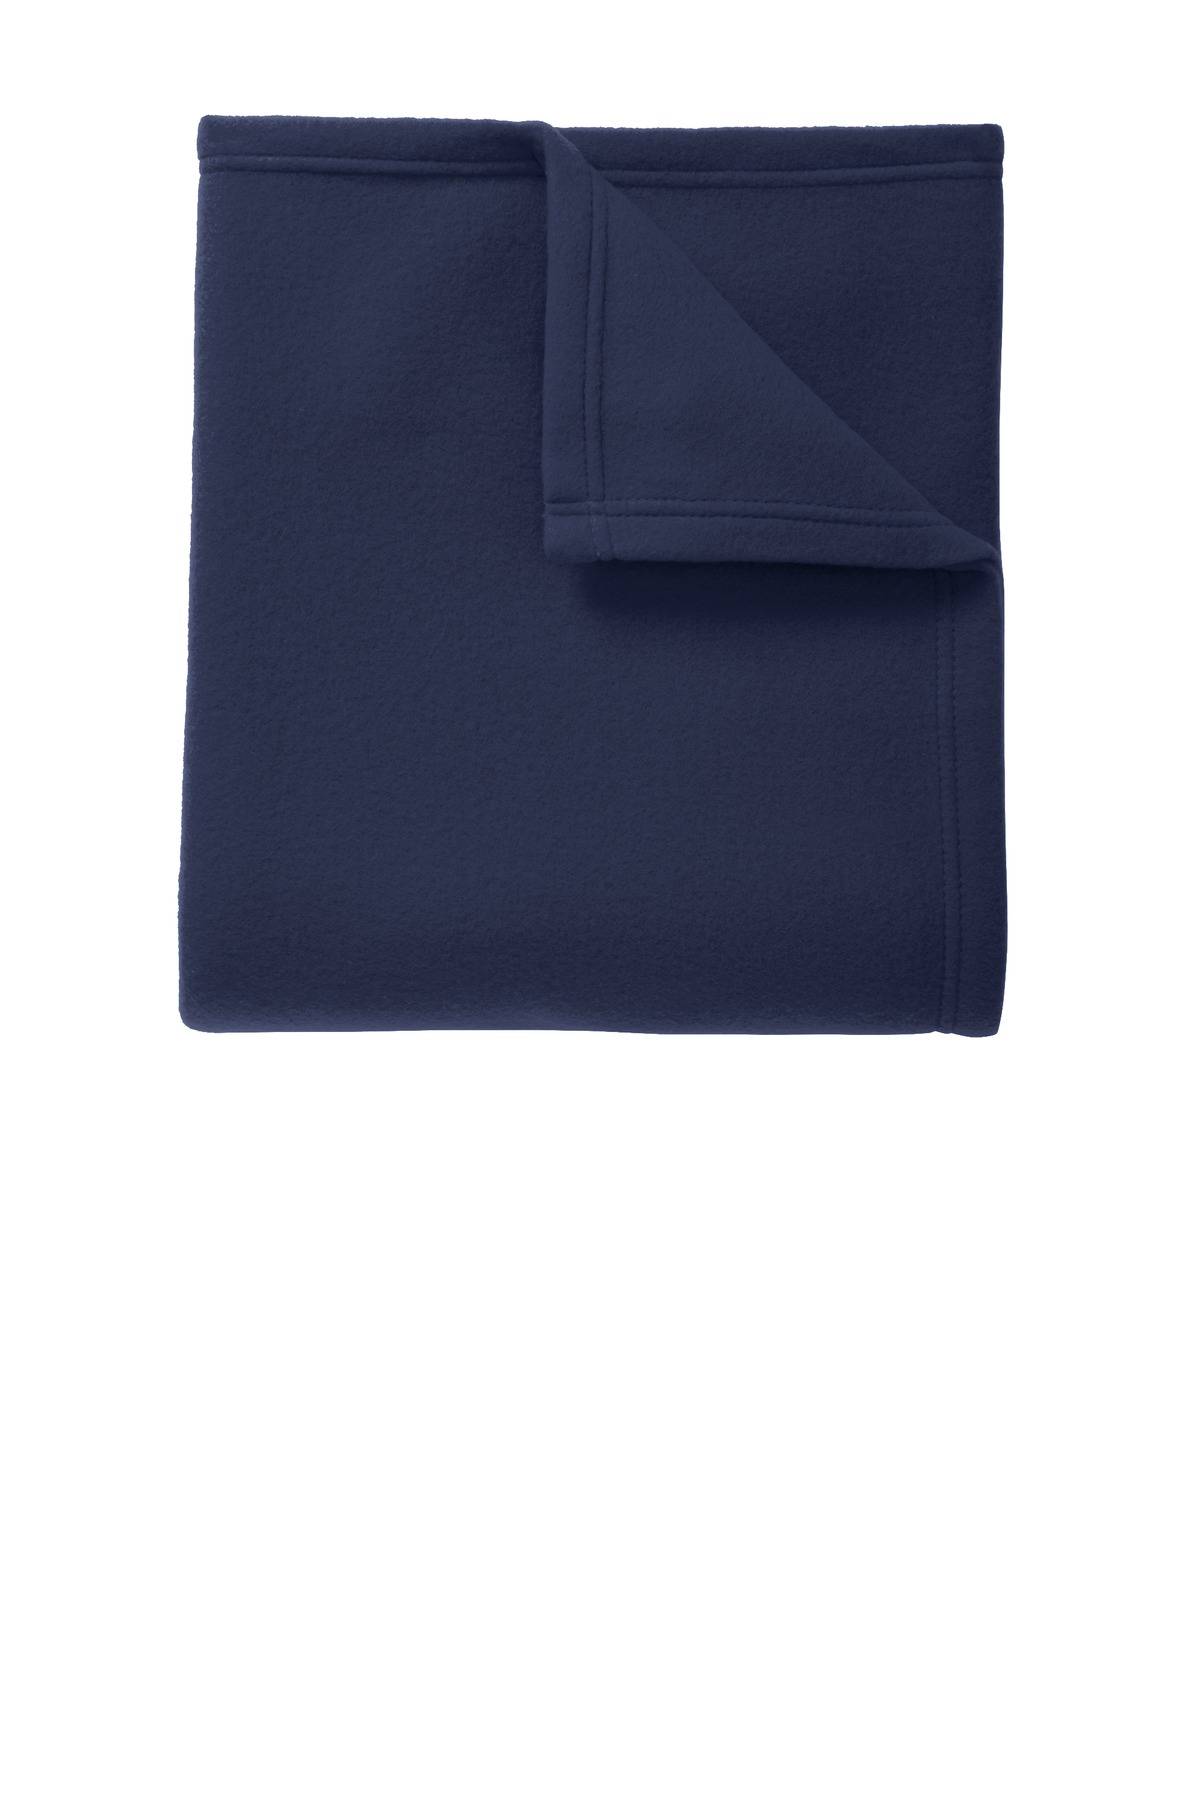 Port Authority BP60 Unisex Core Polyester Fleece Blanket